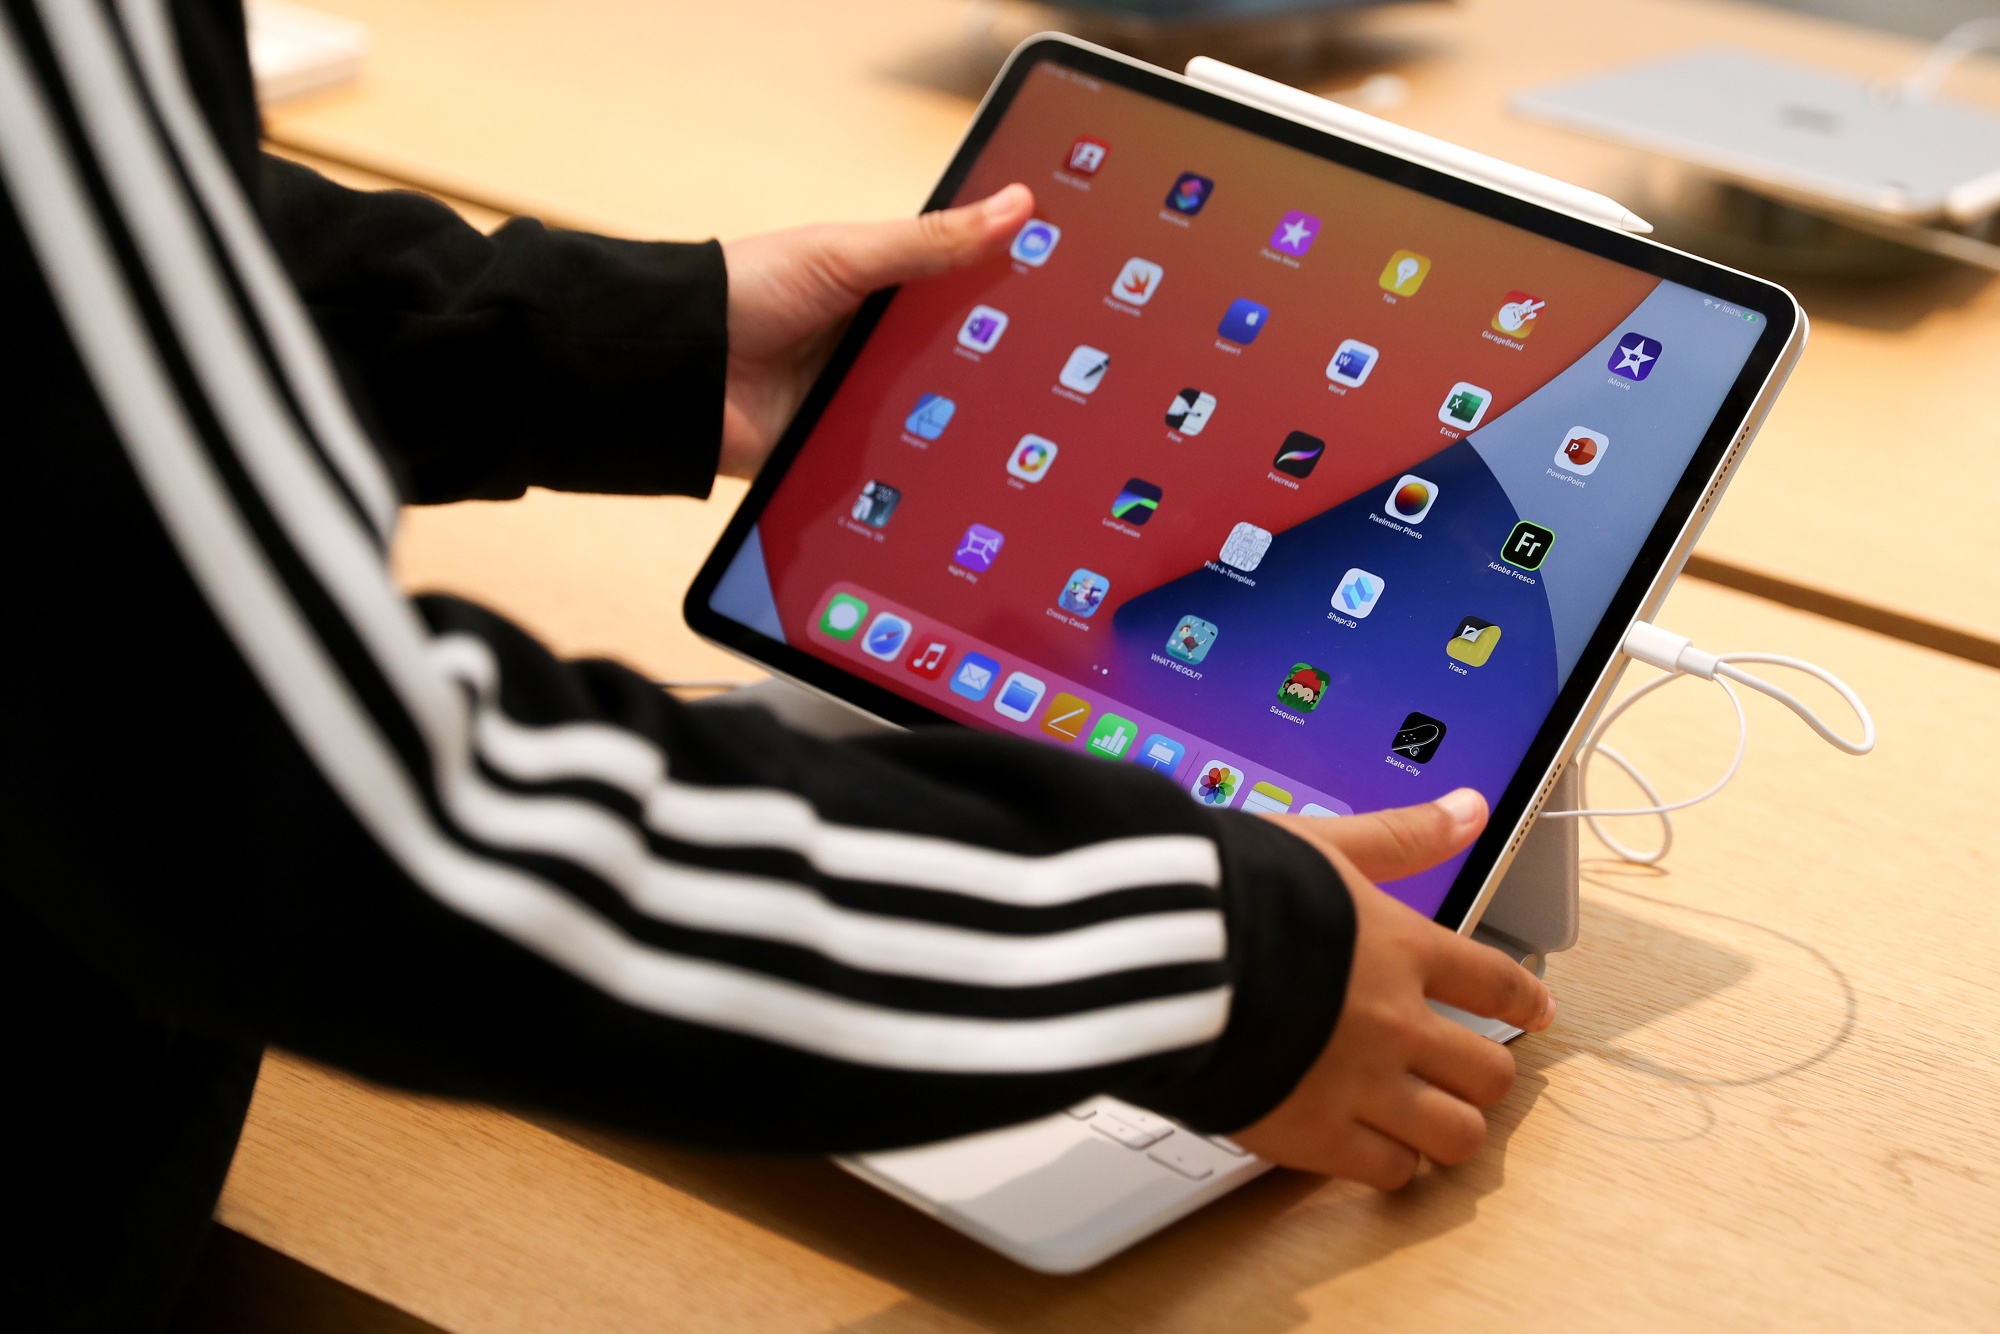 Apple iPad smart home hub dock rumored to be coming soon